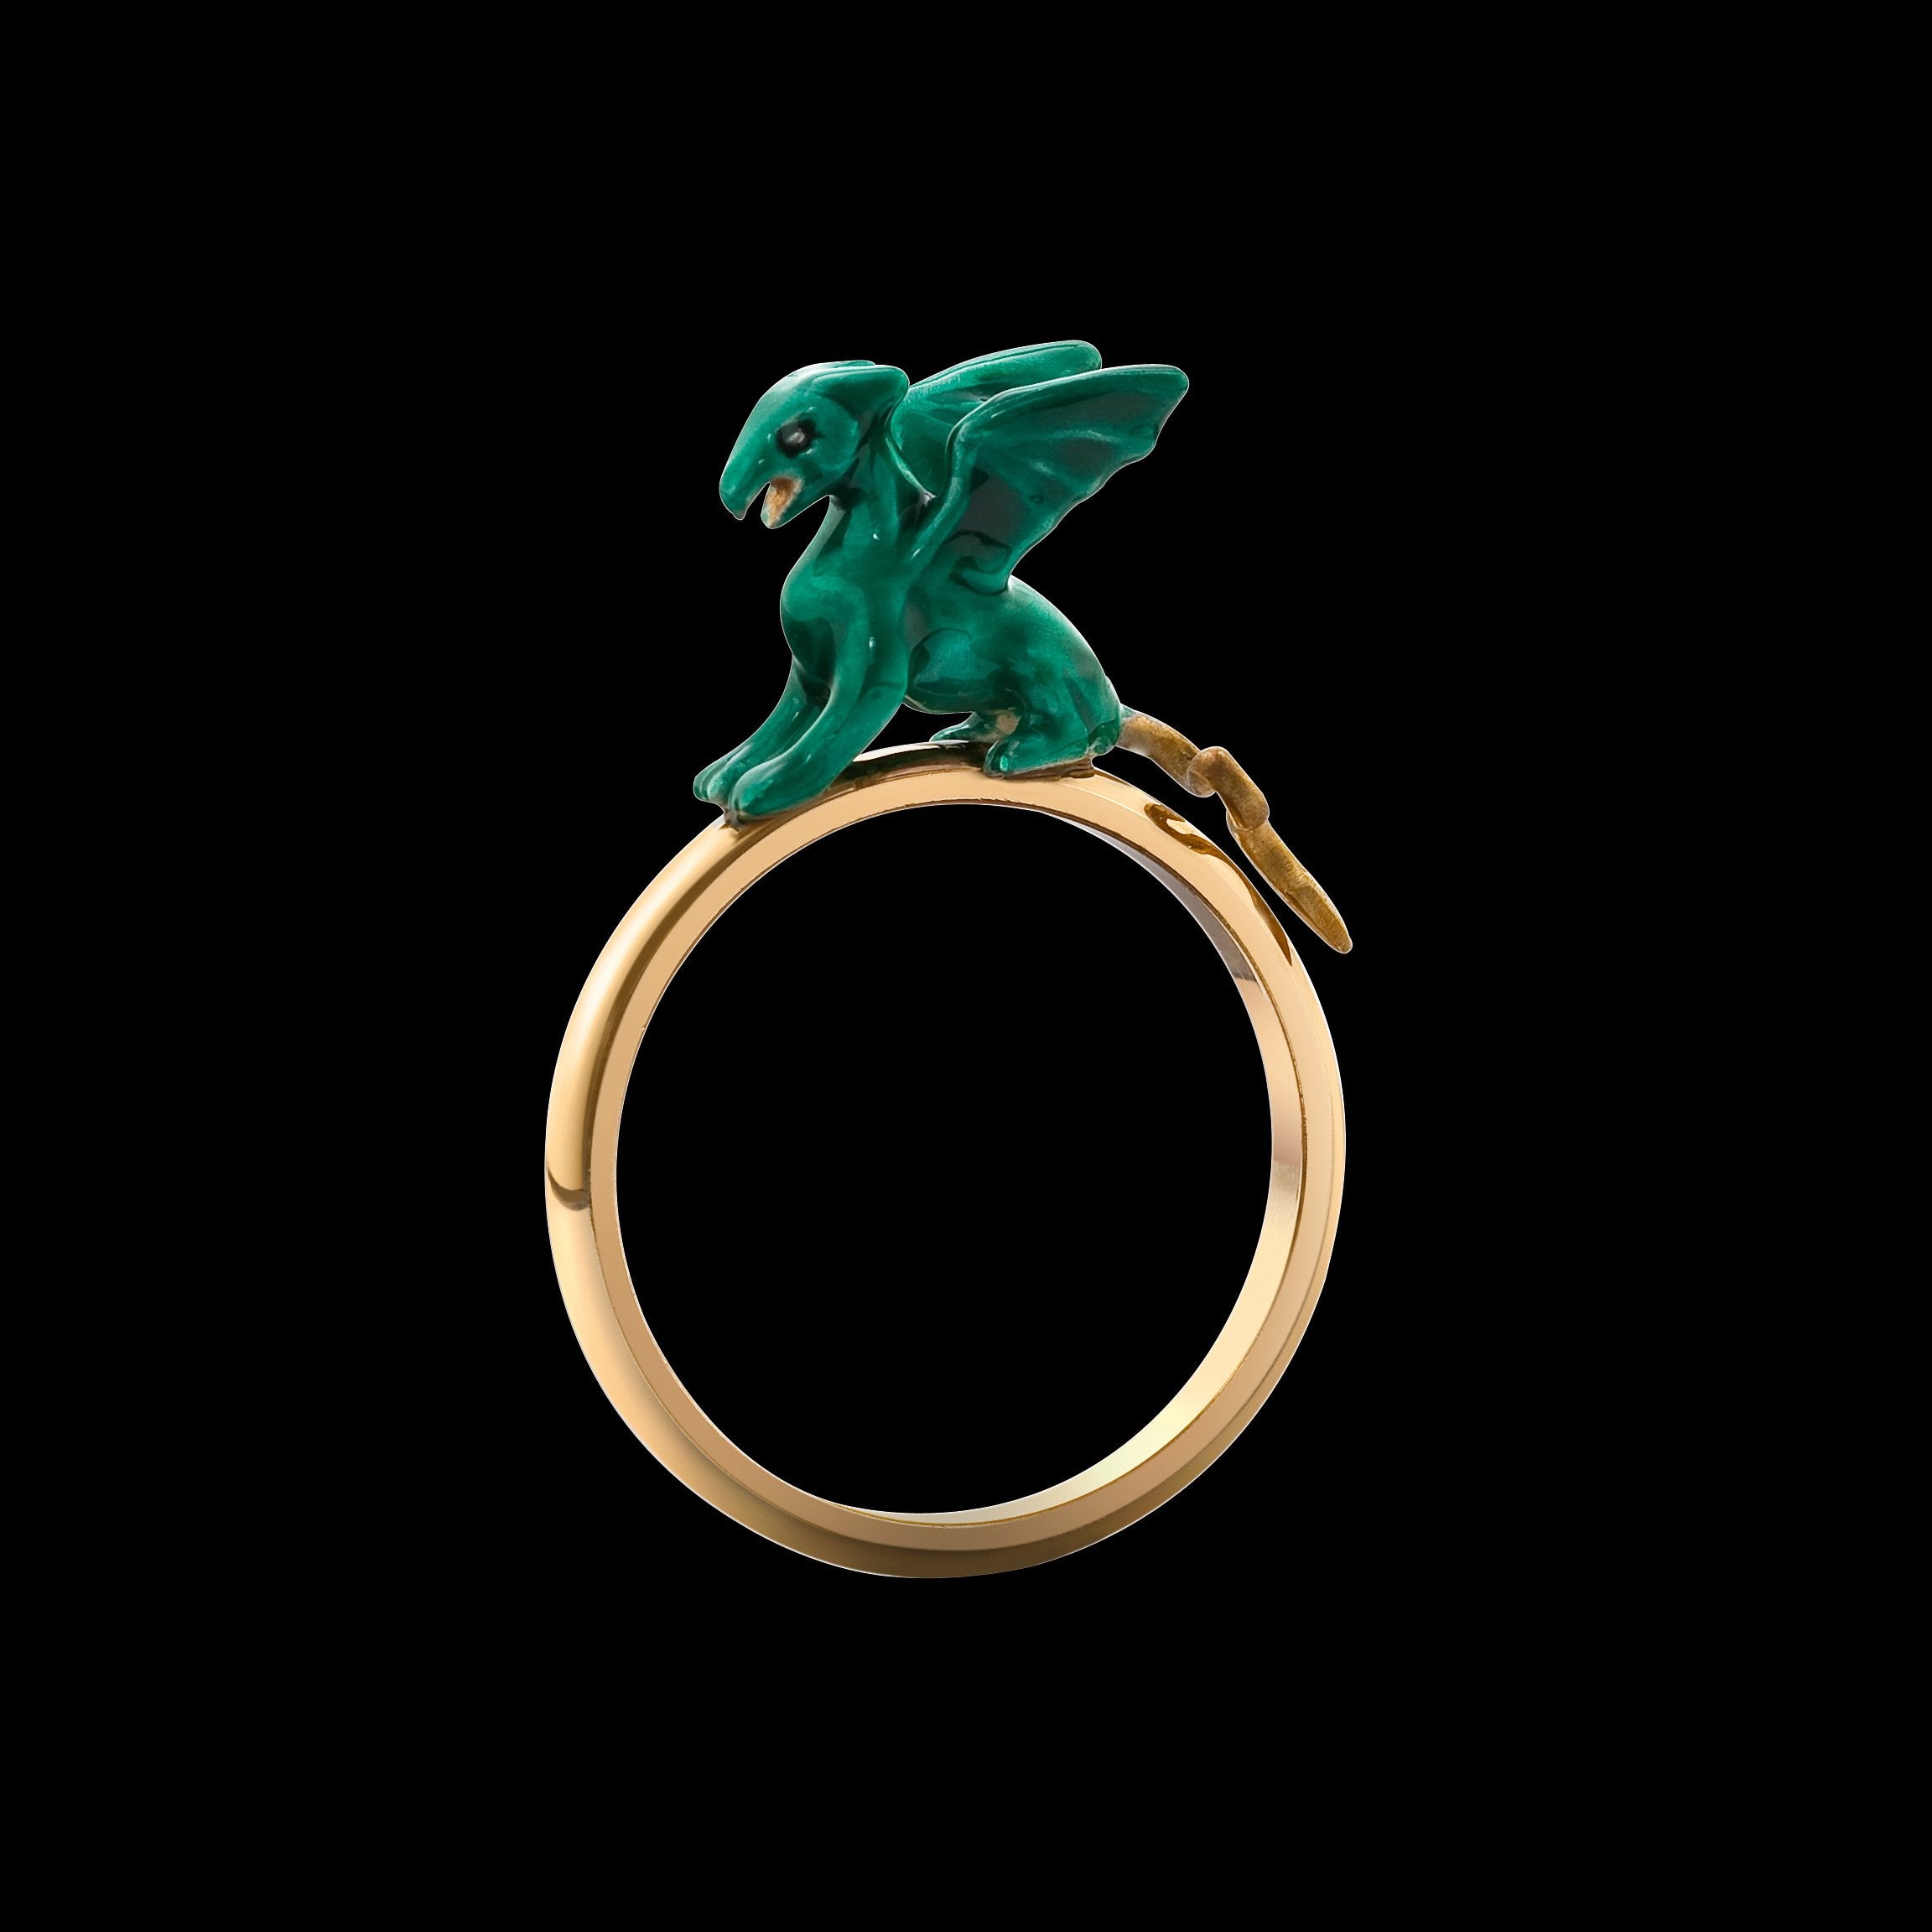 Chinese Zodiac Ring